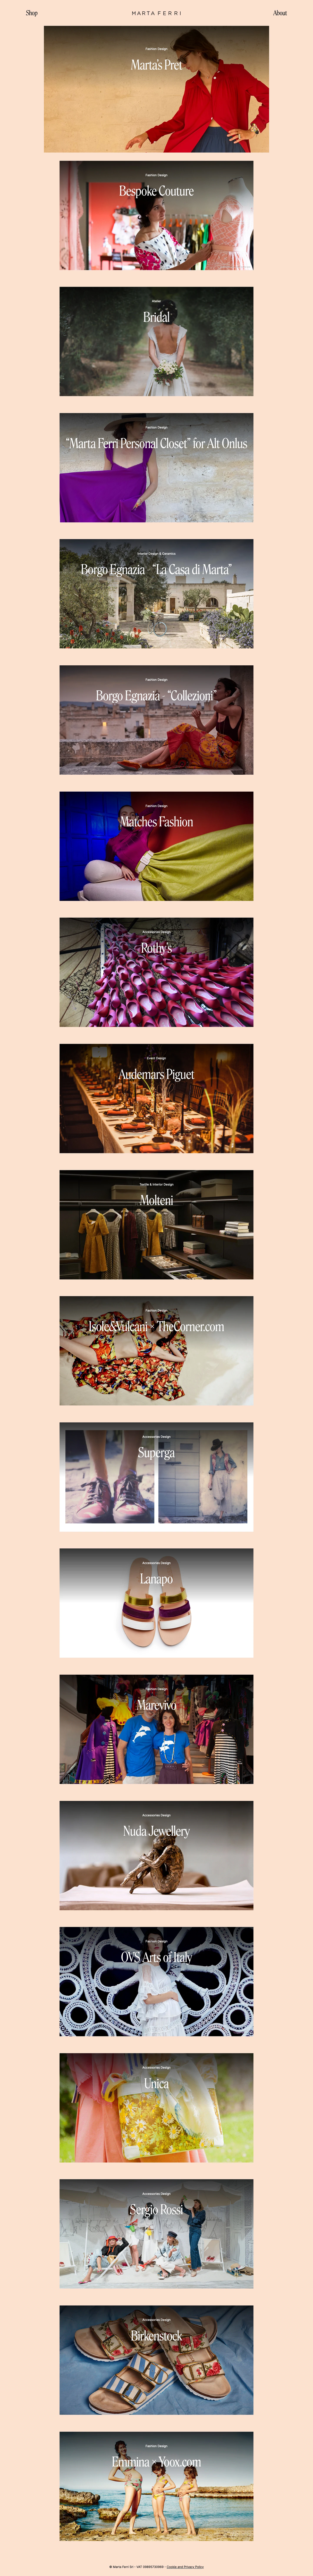 Marta Ferri Landing Page Example: Bespoke tailoring, collaborations and creative direction. Marta Ferri is the designer and founder of Atelier Marta Ferri.